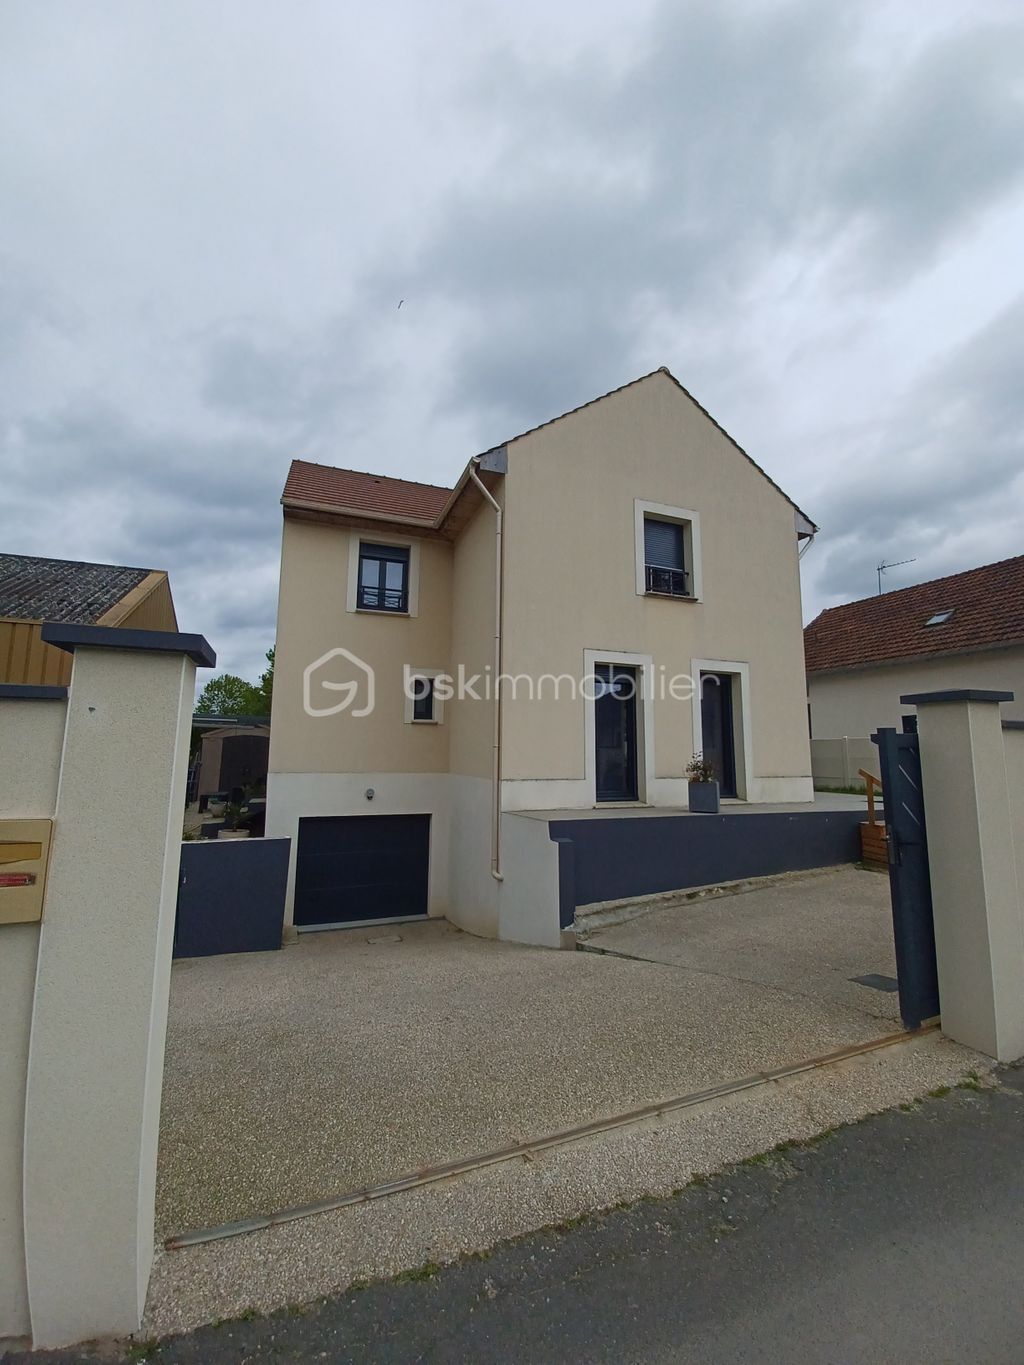 Achat maison à vendre 4 chambres 120 m² - Morigny-Champigny